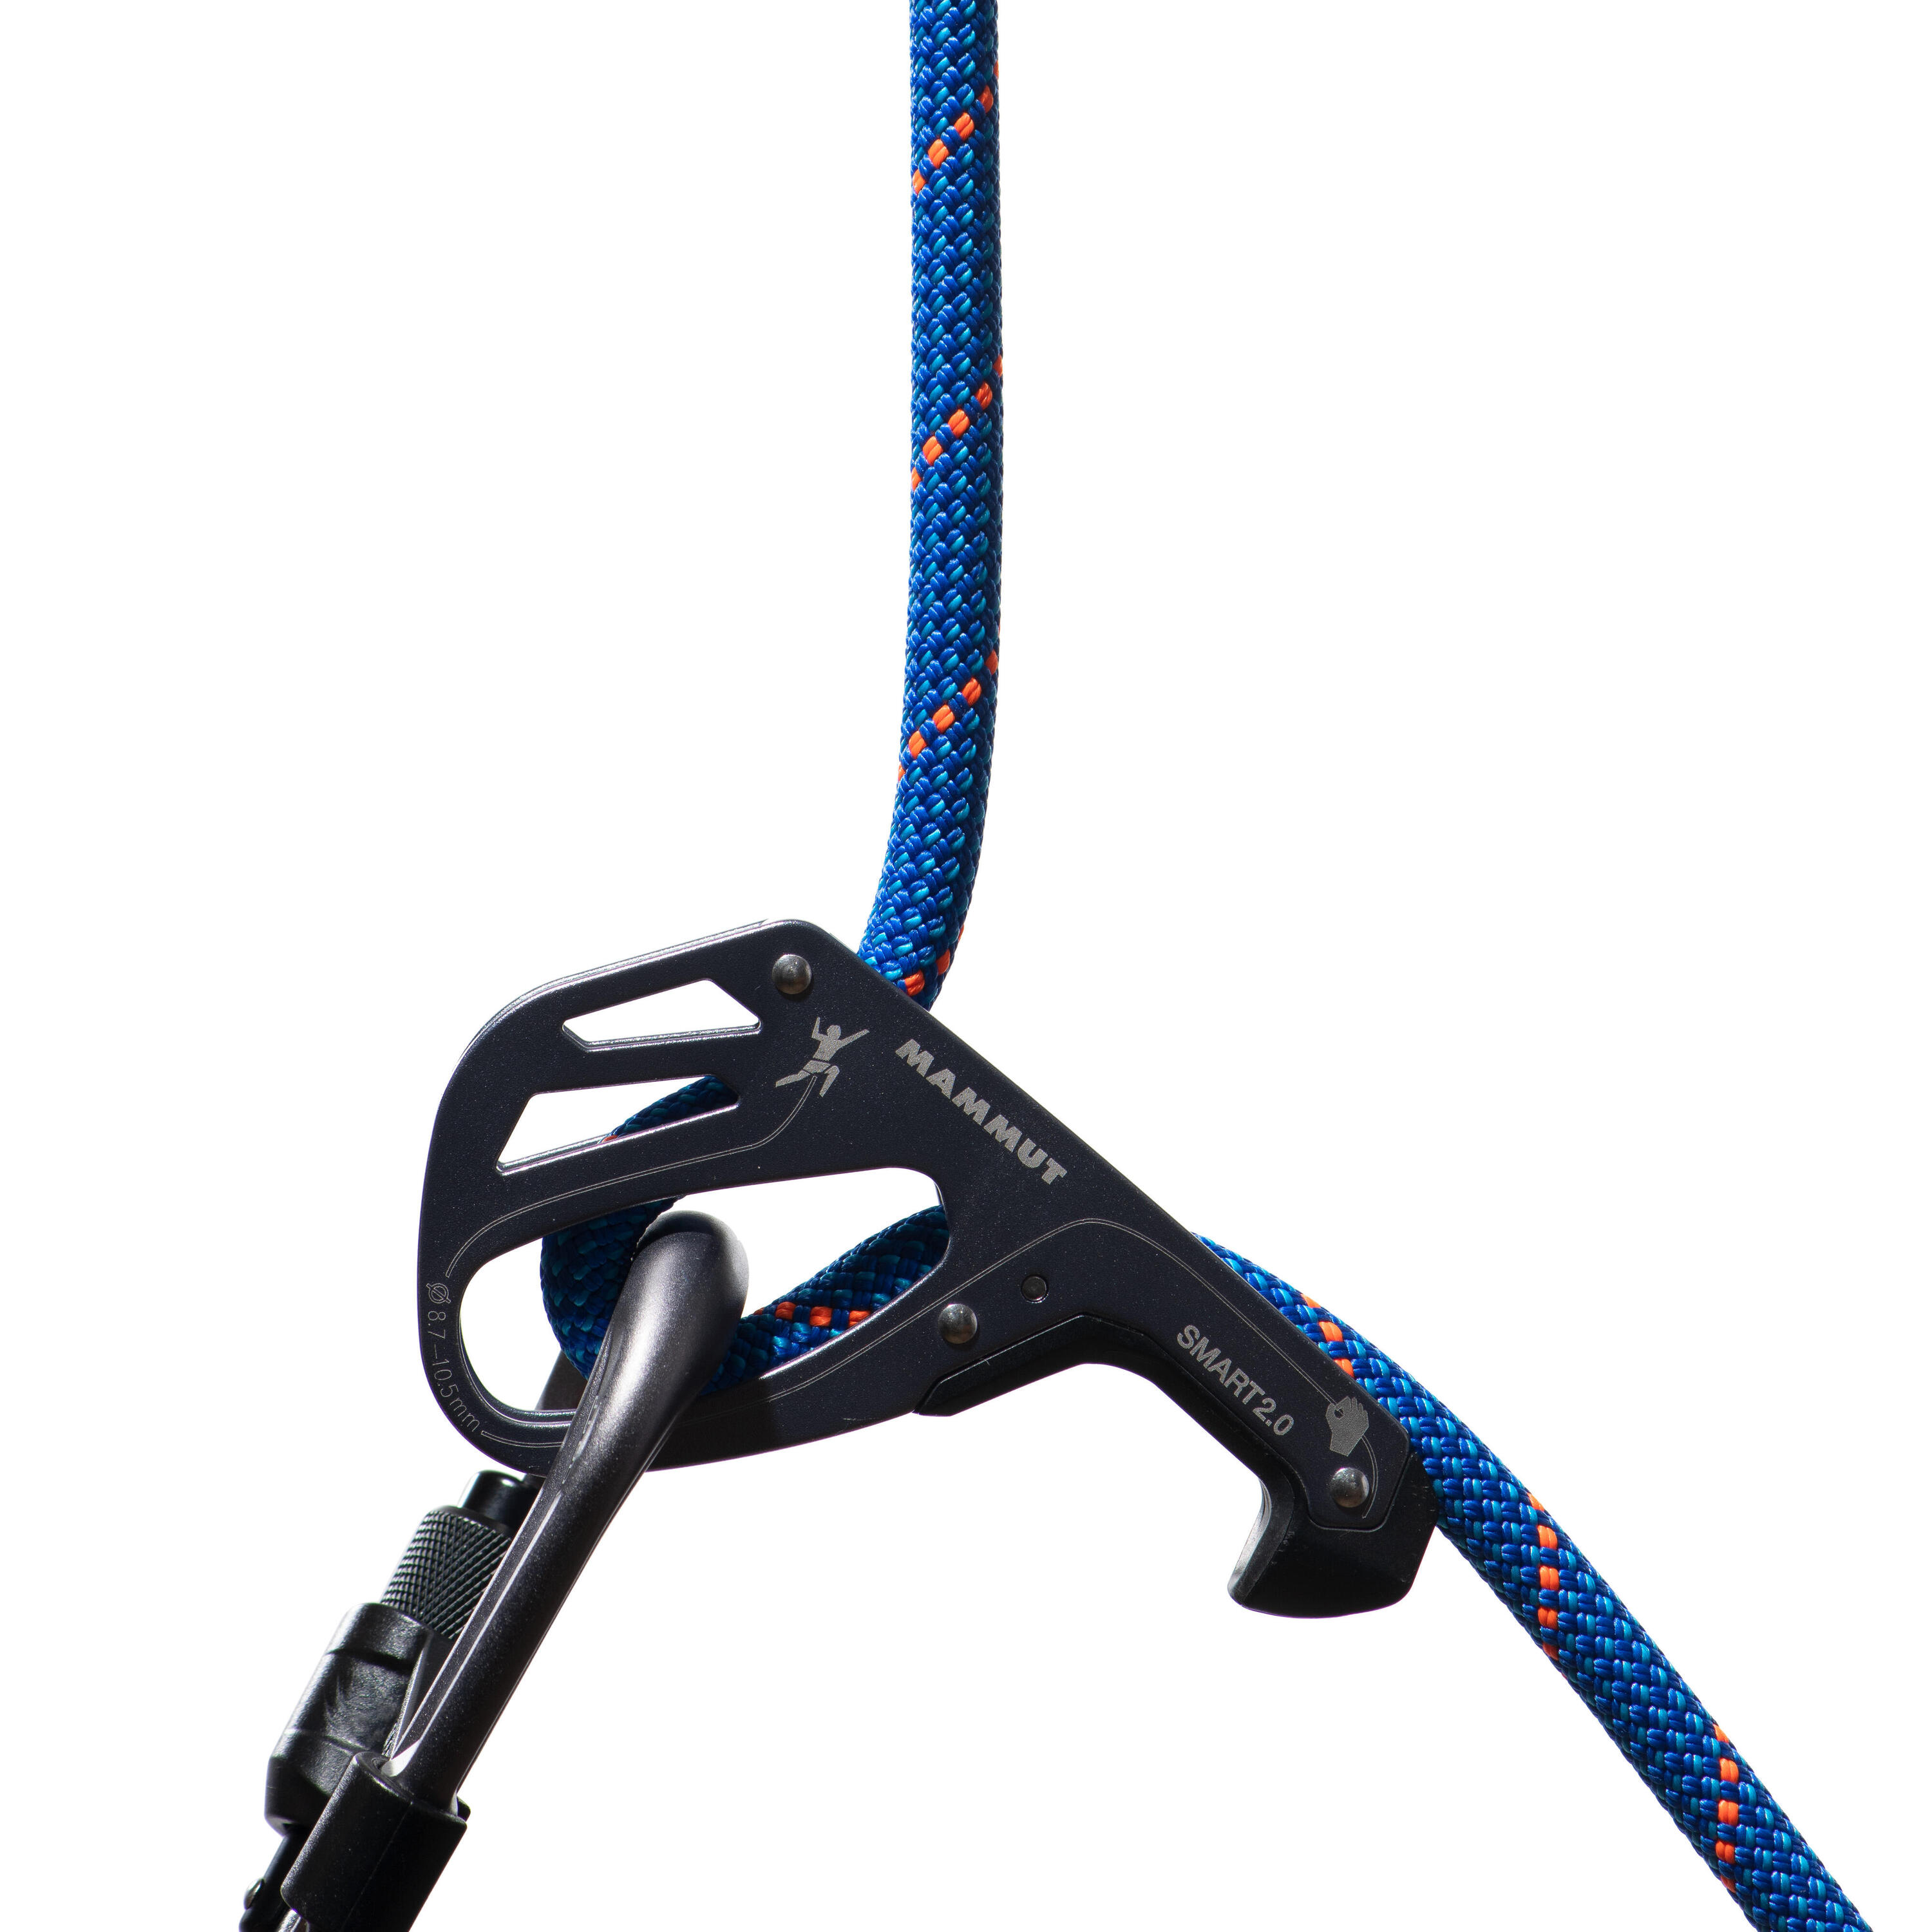 Crag Dry Single Rope 9.5 mm x 60m - Blue 4/4